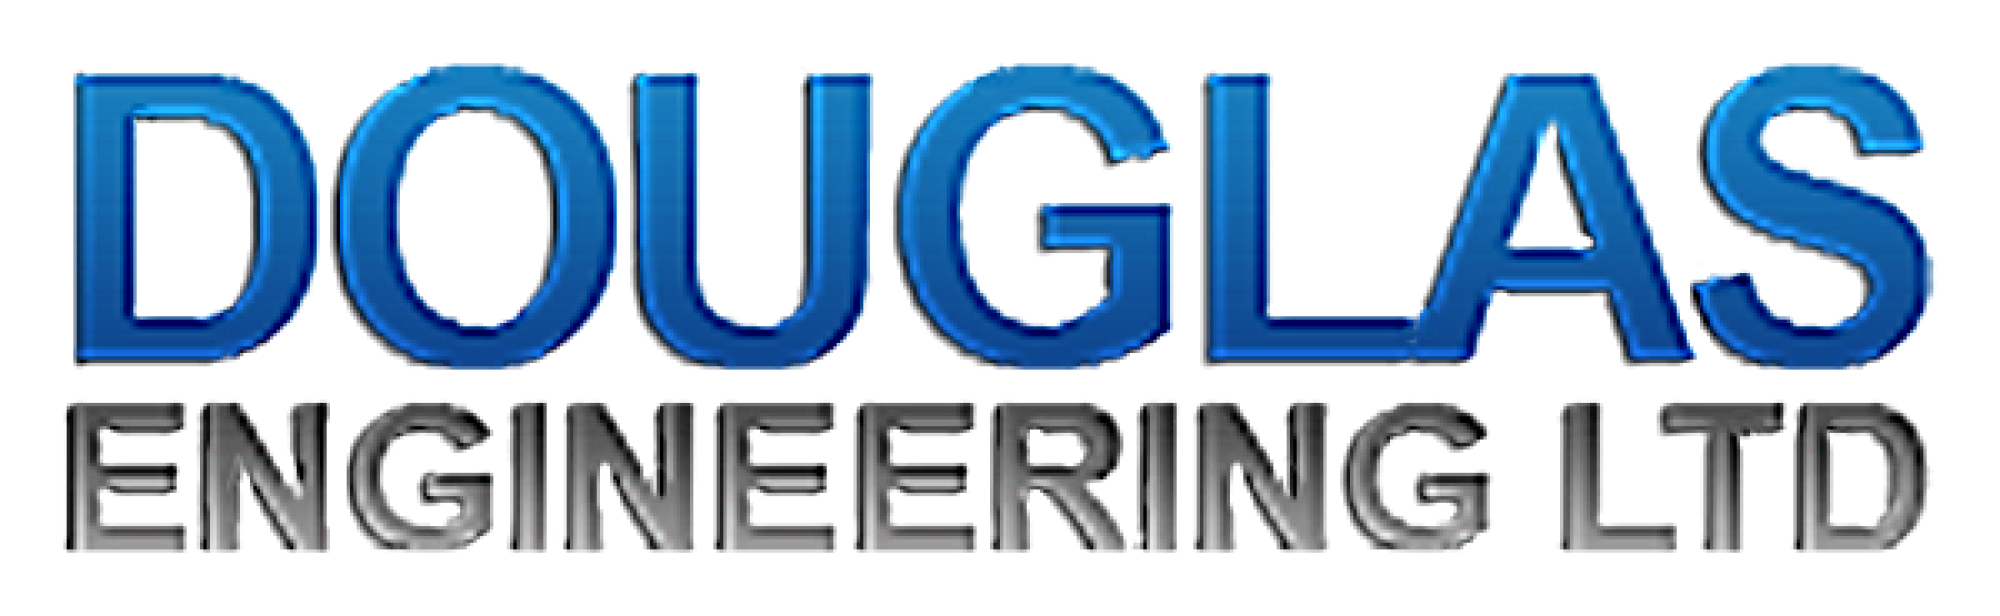 Douglas Engineering Limited